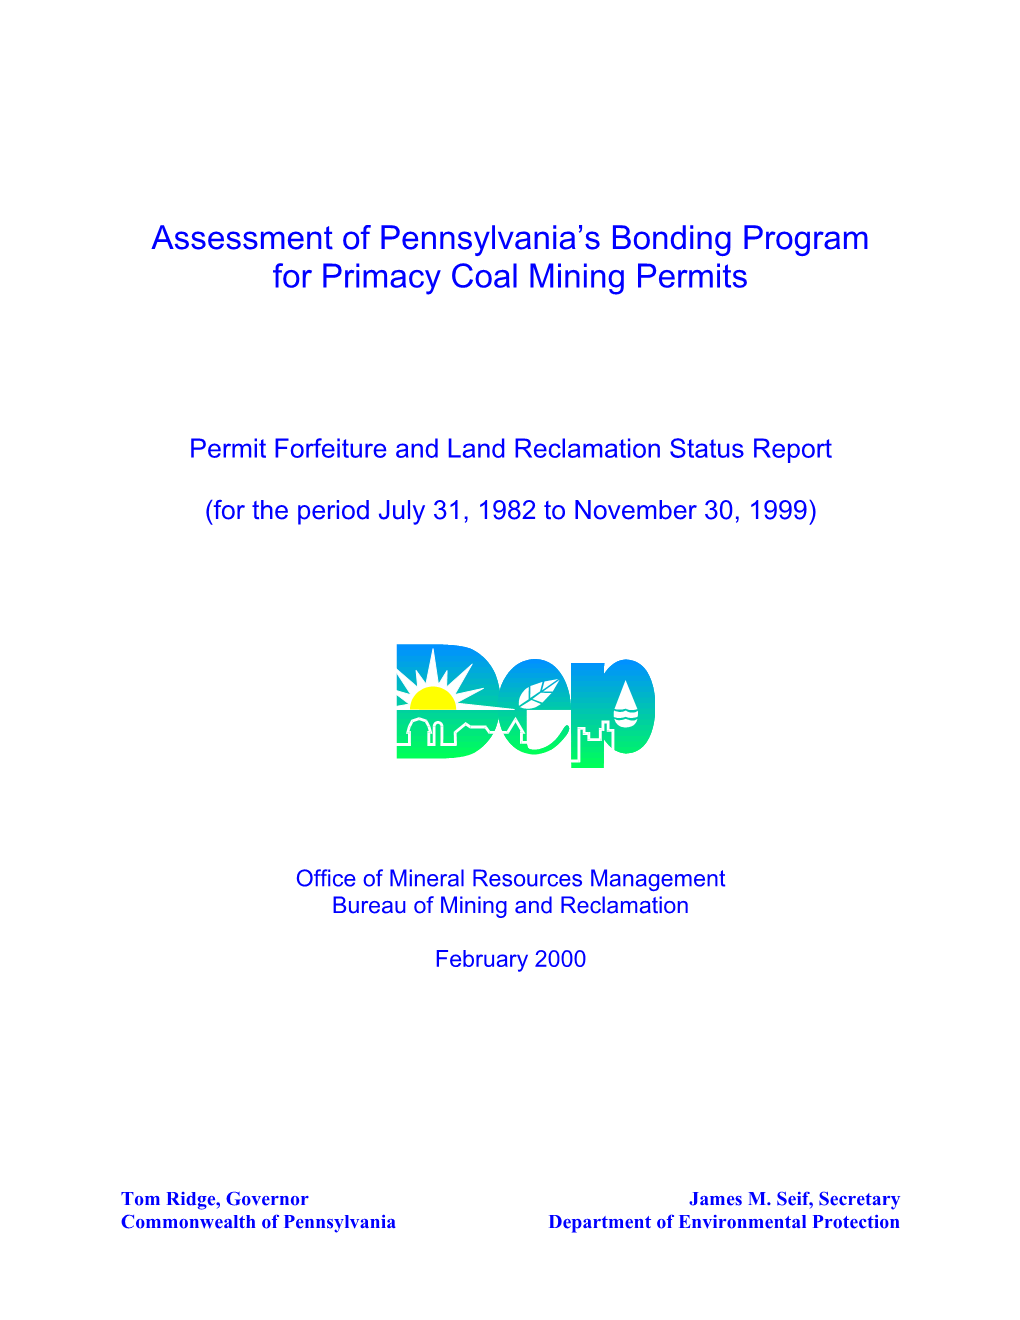 Pennsylvania S Alternate Bonding Program for Primacy Coal Mining Permits